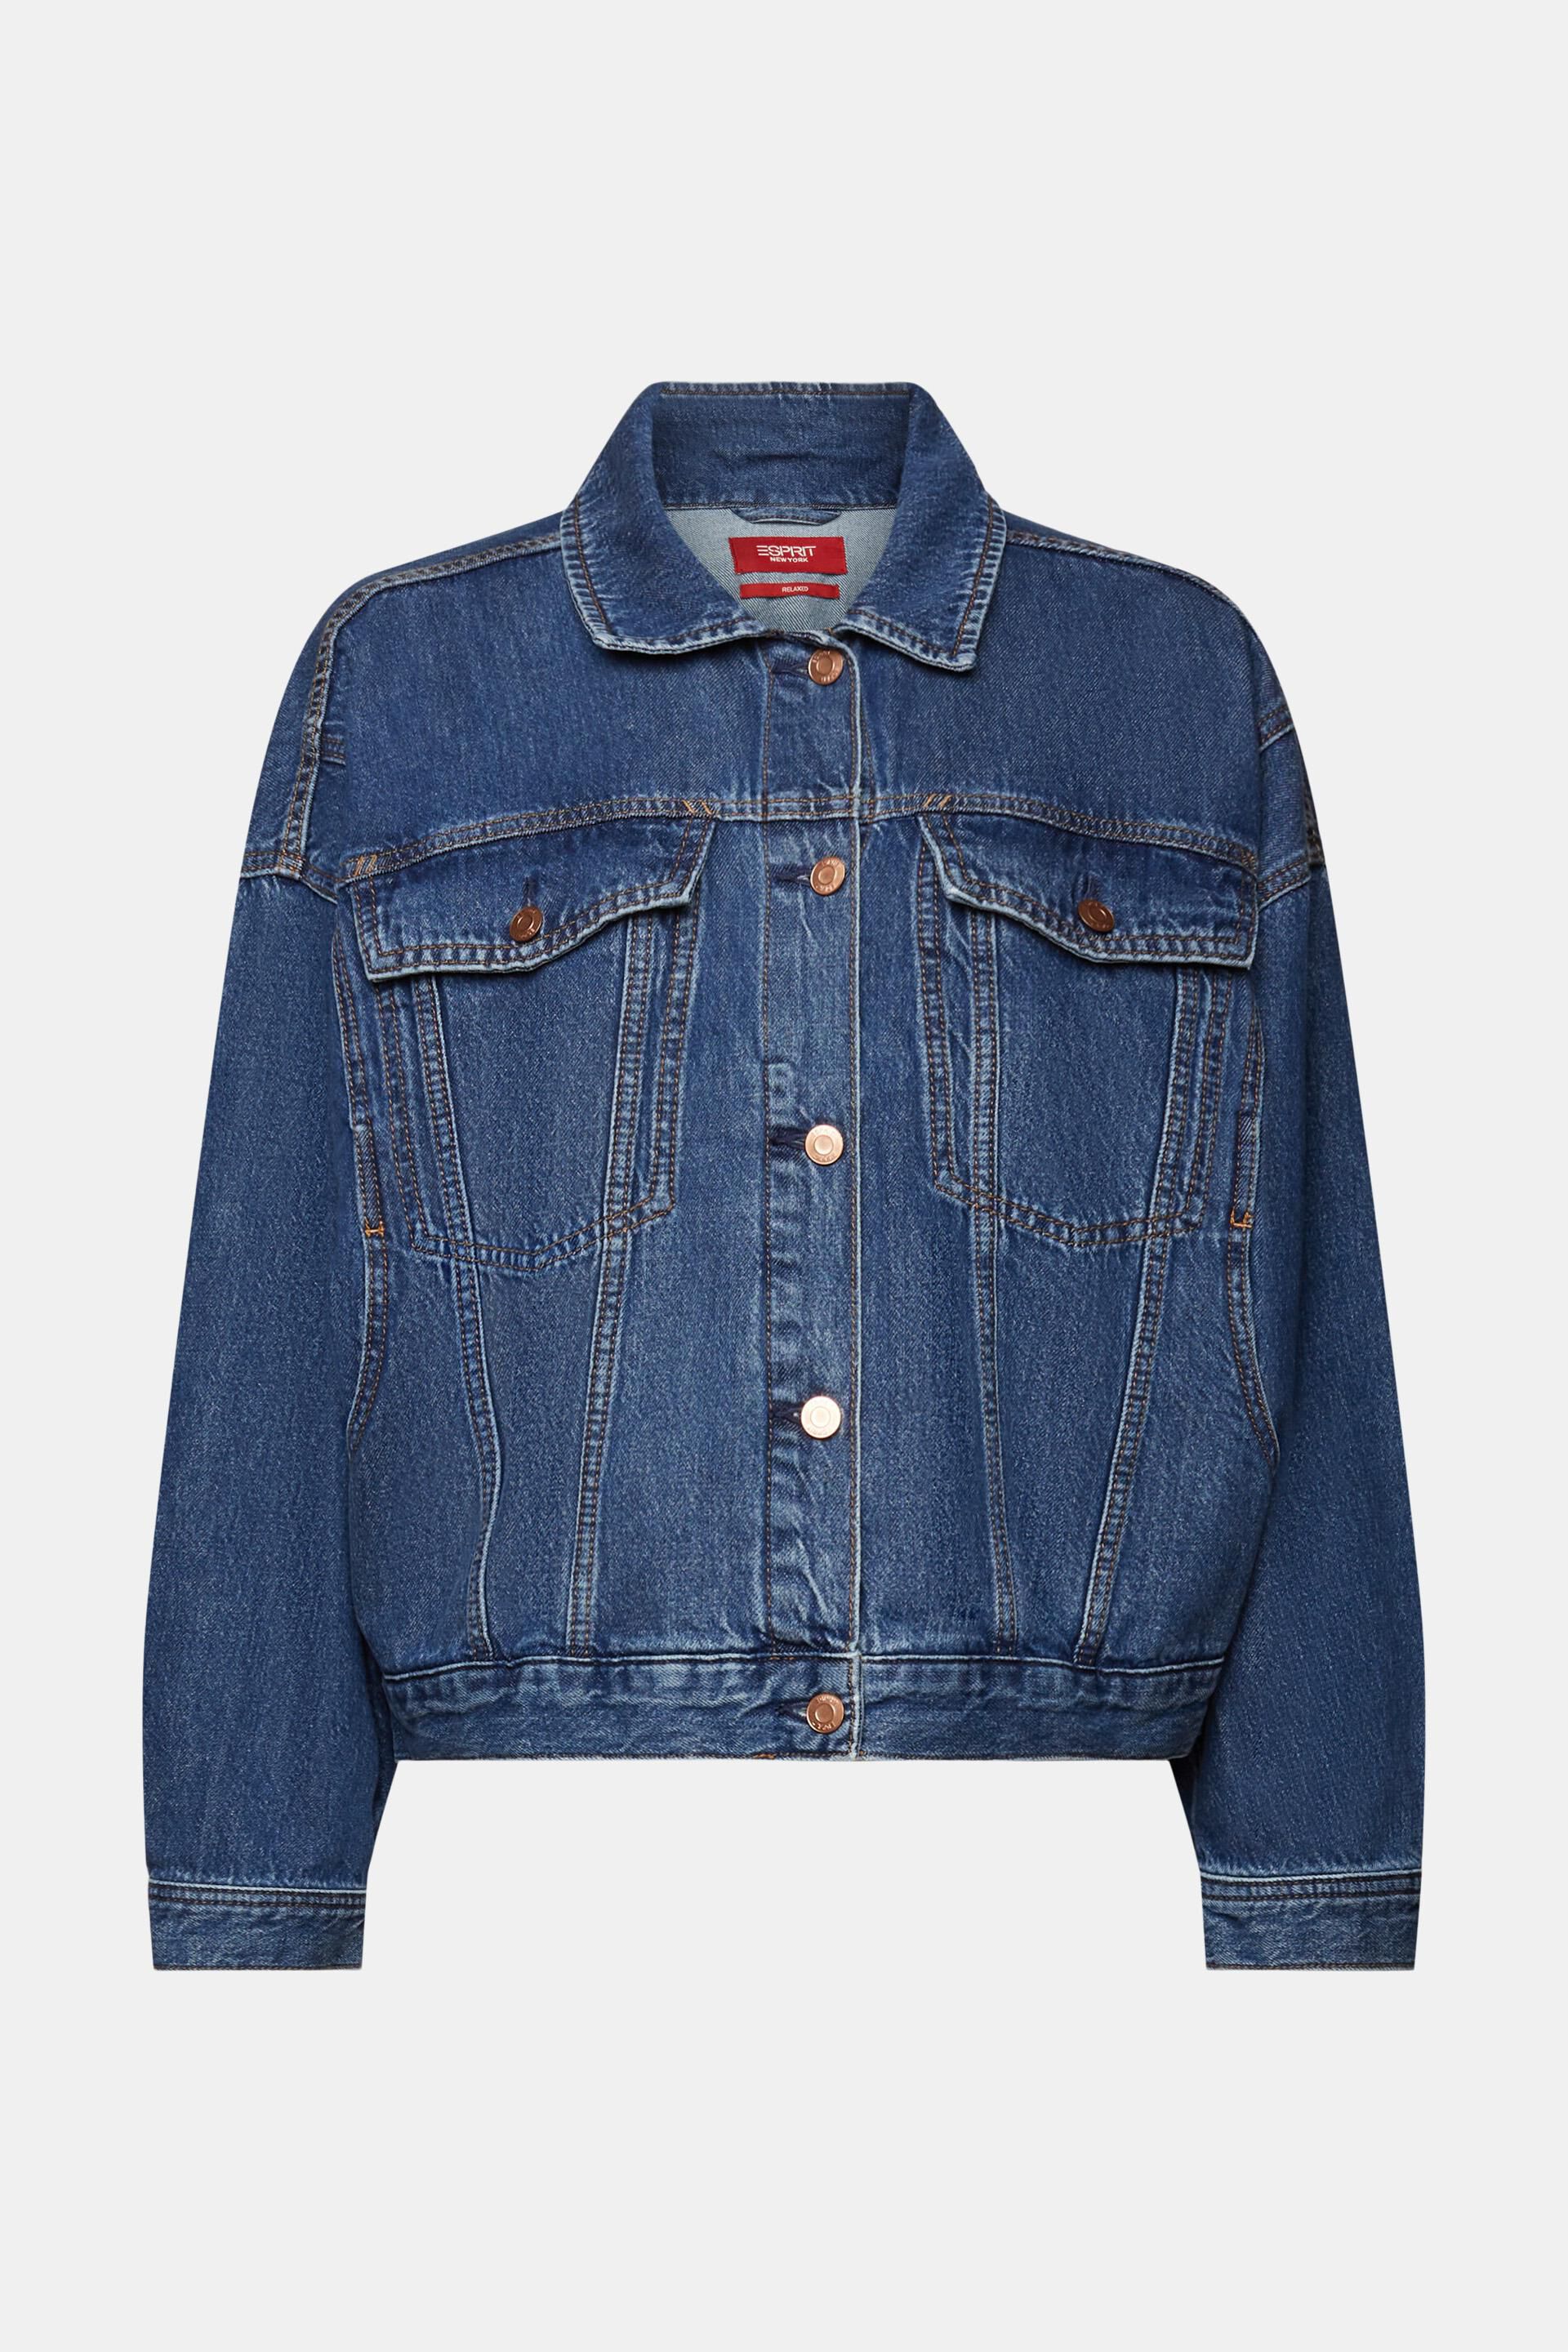 Share 165+ oversized jeans jacket best